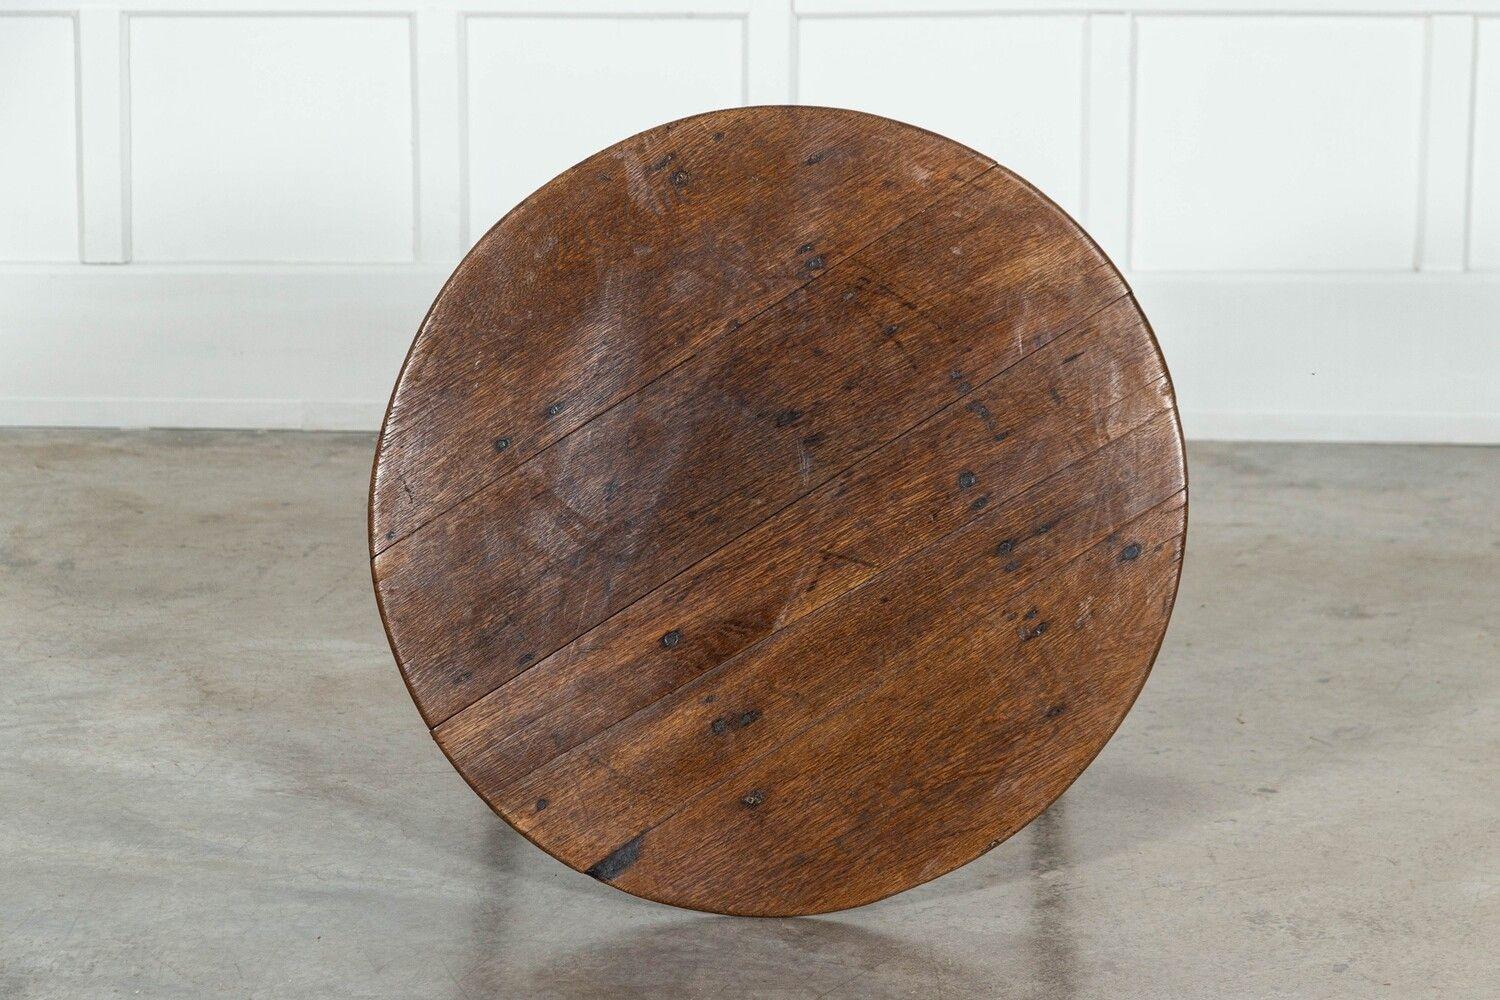 circa 1830
19thC English Oak Cricket Table
sku 1584
W73 x D73 x H62cm